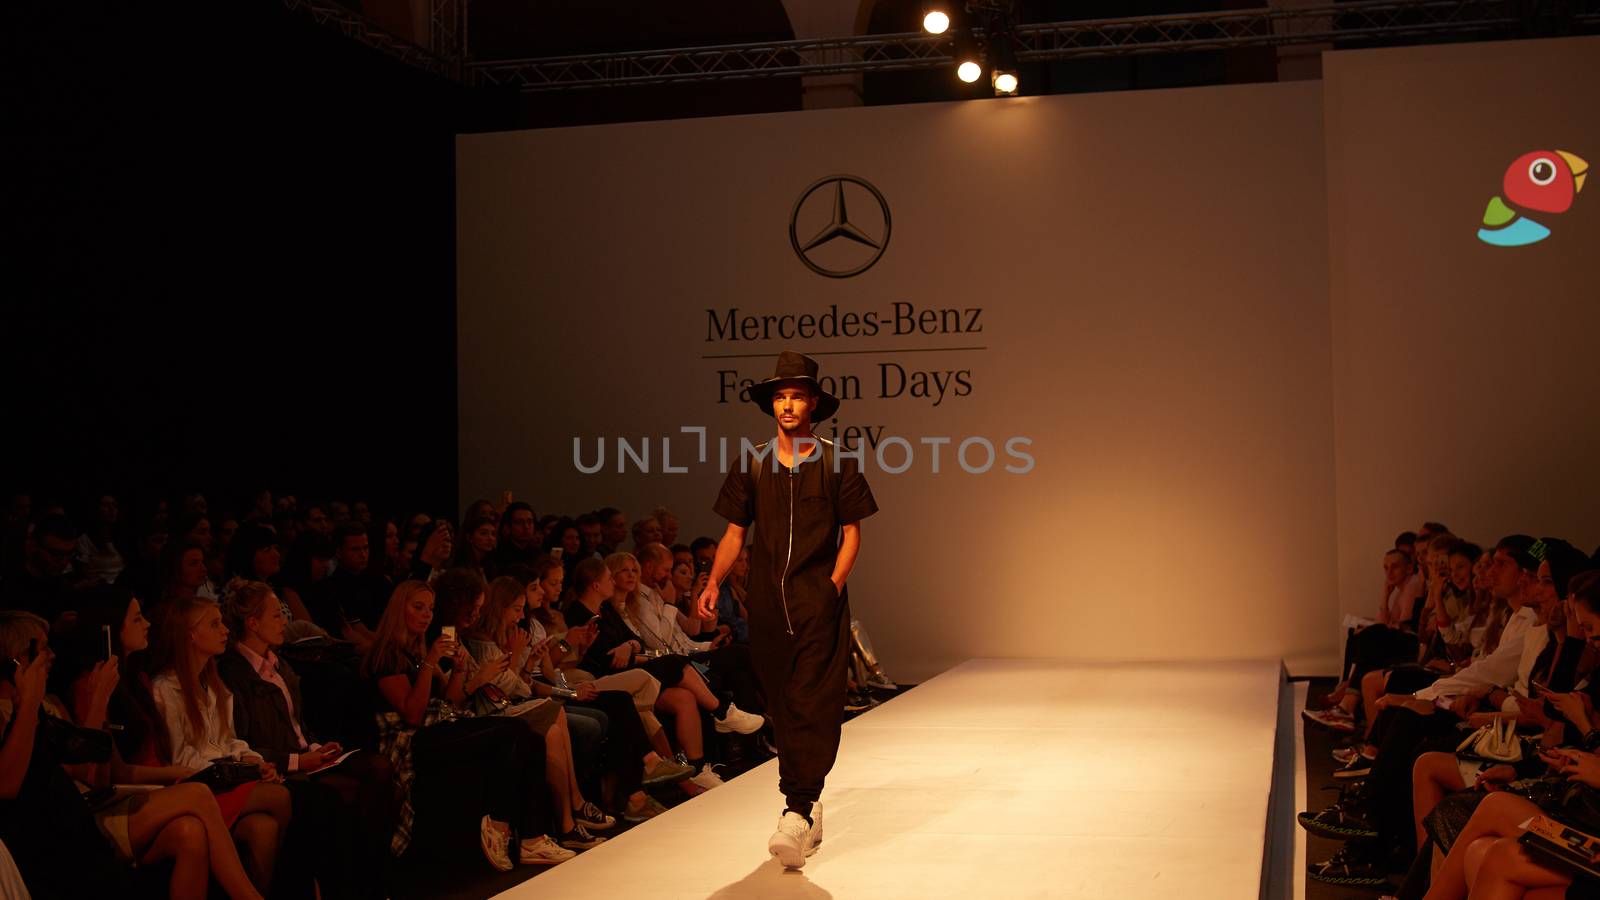 KIEV, UKRAINE - SEPTEMBER 6: Mercedes-Benz Kiev Fashion Days. Fashion show 